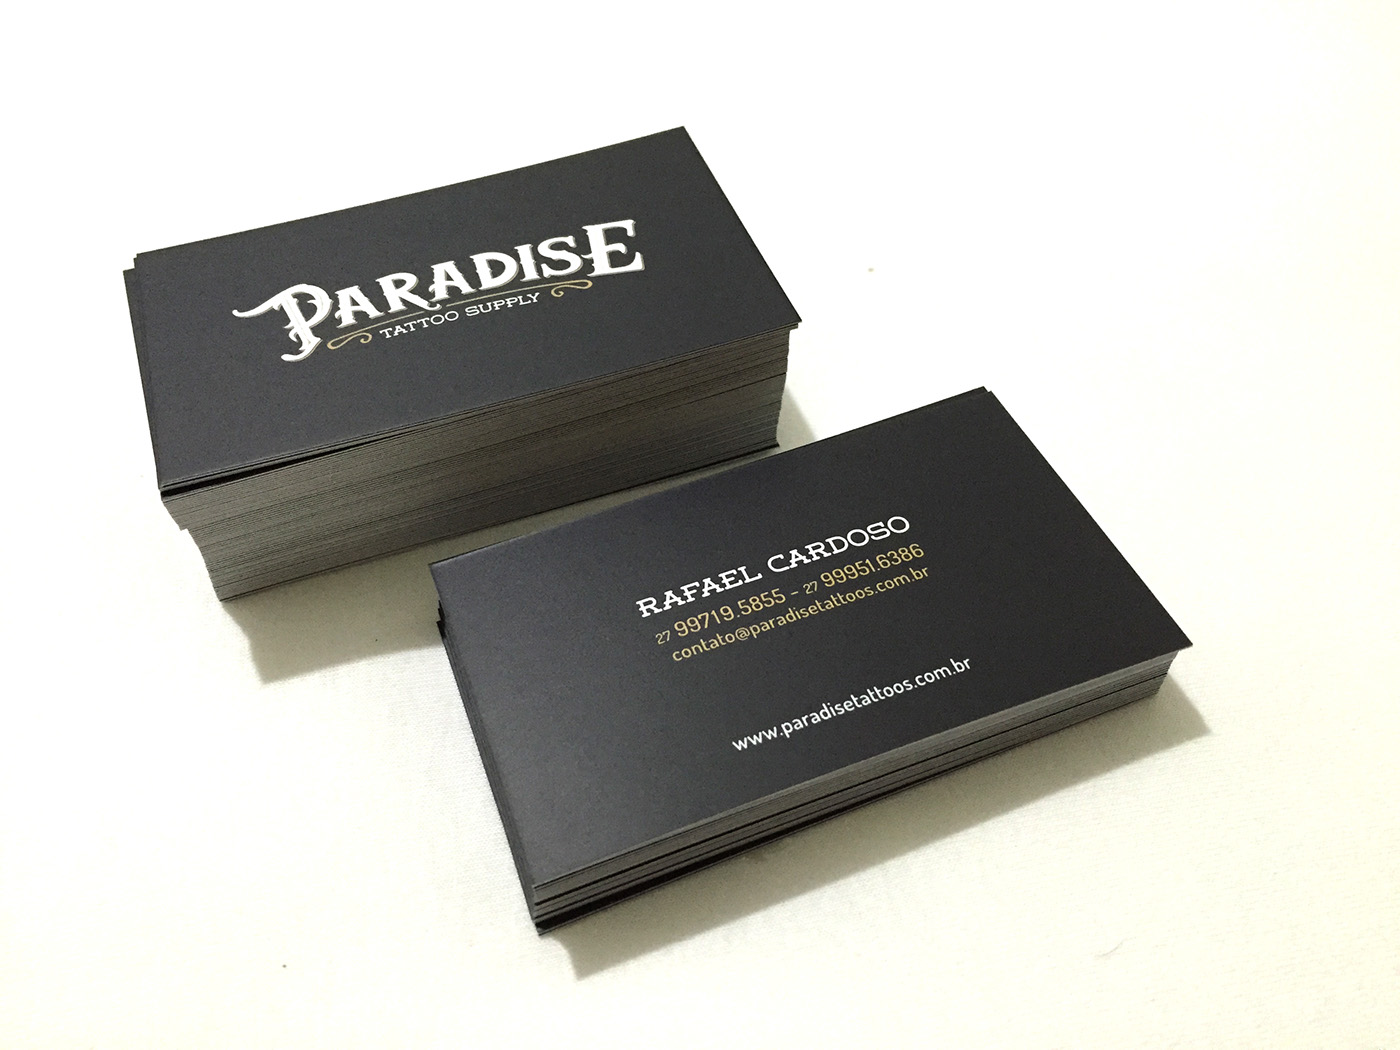 paradise tattoo supply brand lettering draw speed video tattooing business card studio handmade tshirt Script vintage